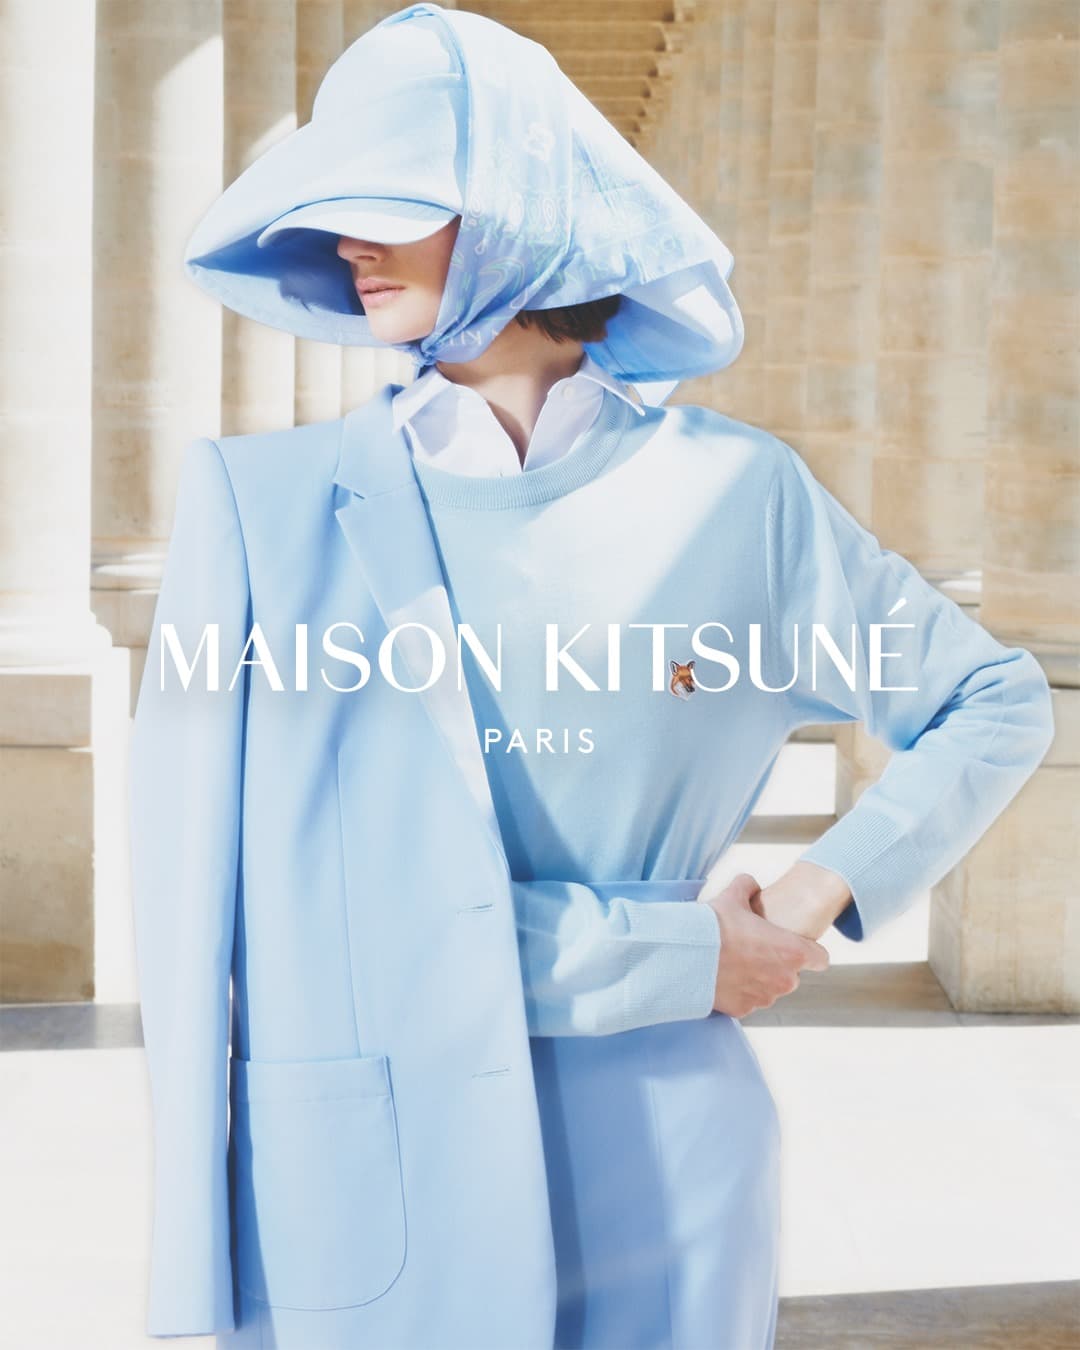 Maison Kitsuné Spring 2021 Ad Campaign